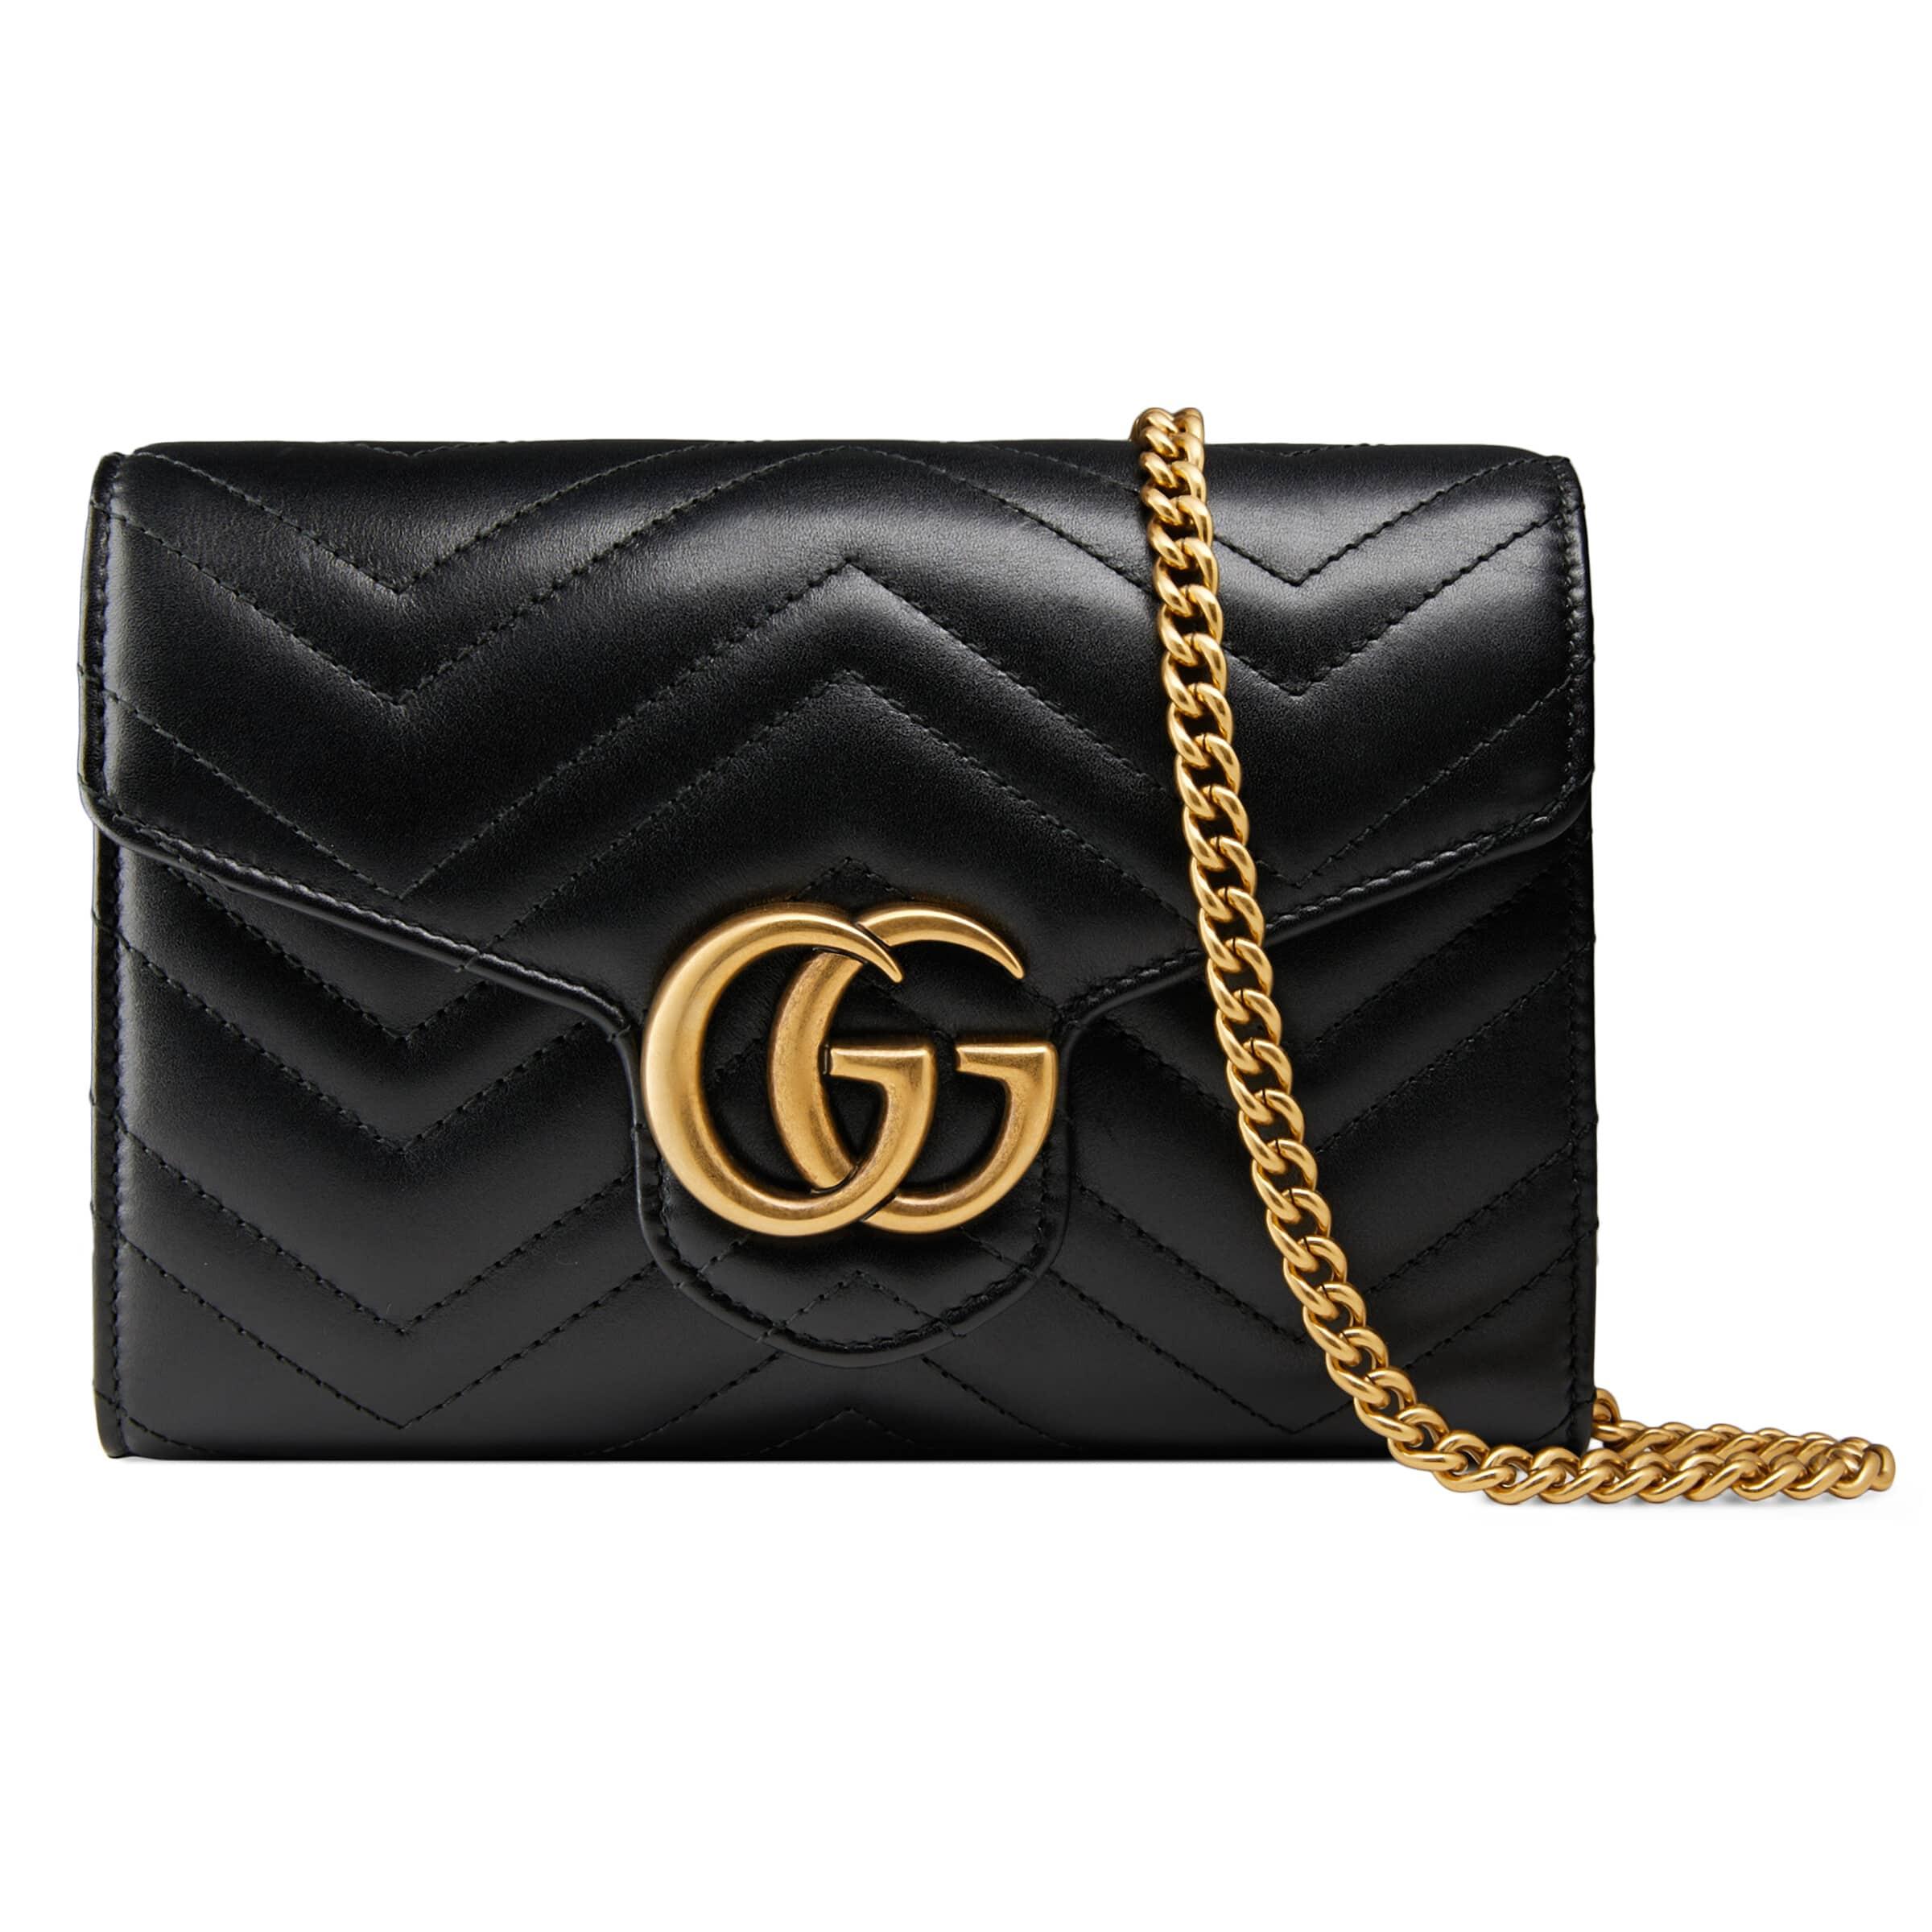 Gucci GG Marmont Matelassé Mini Bag in Black - Save 18% | Lyst